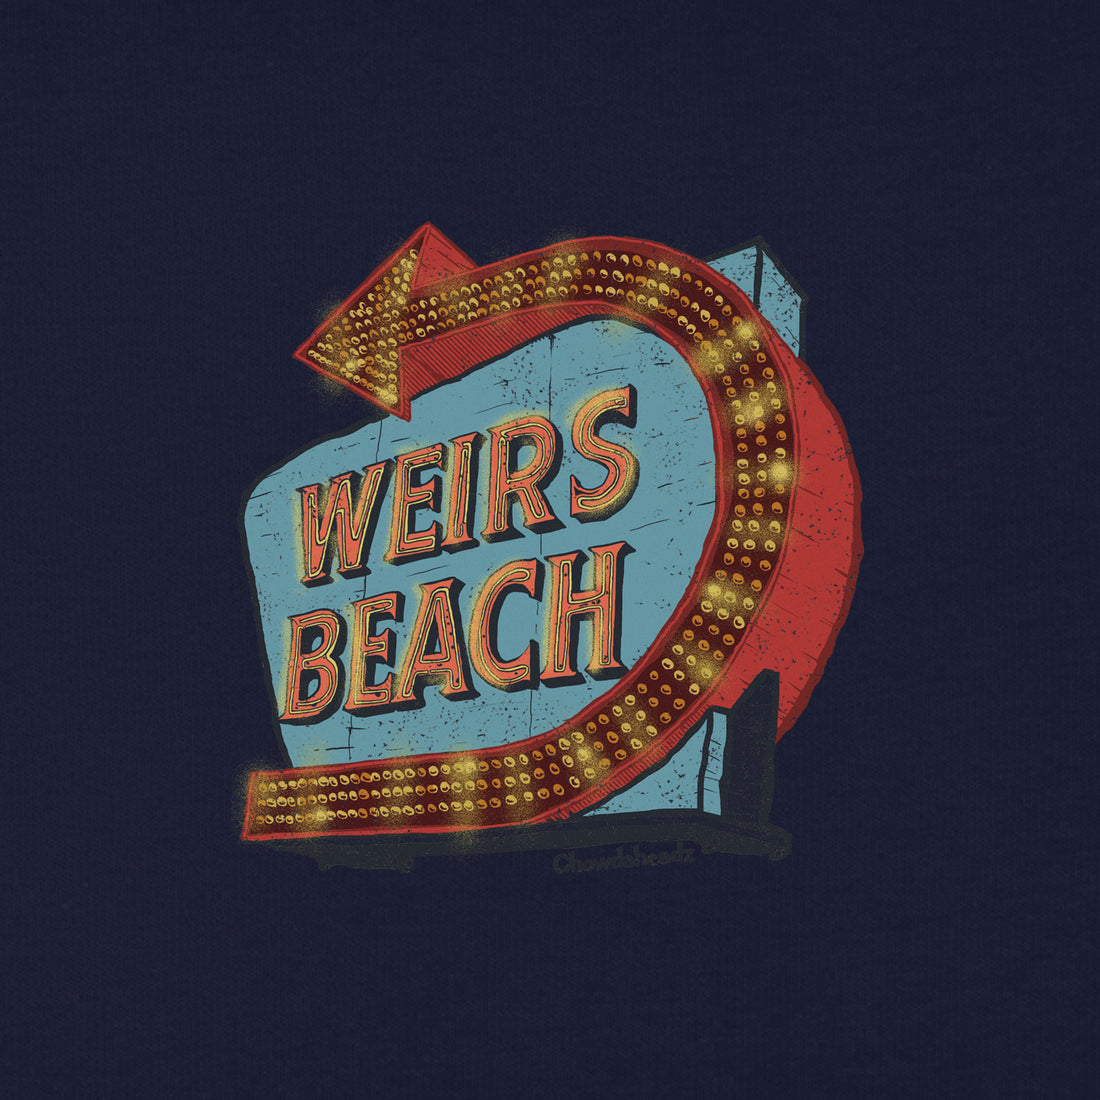 Weirs Beach Youth T-Shirt - Chowdaheadz